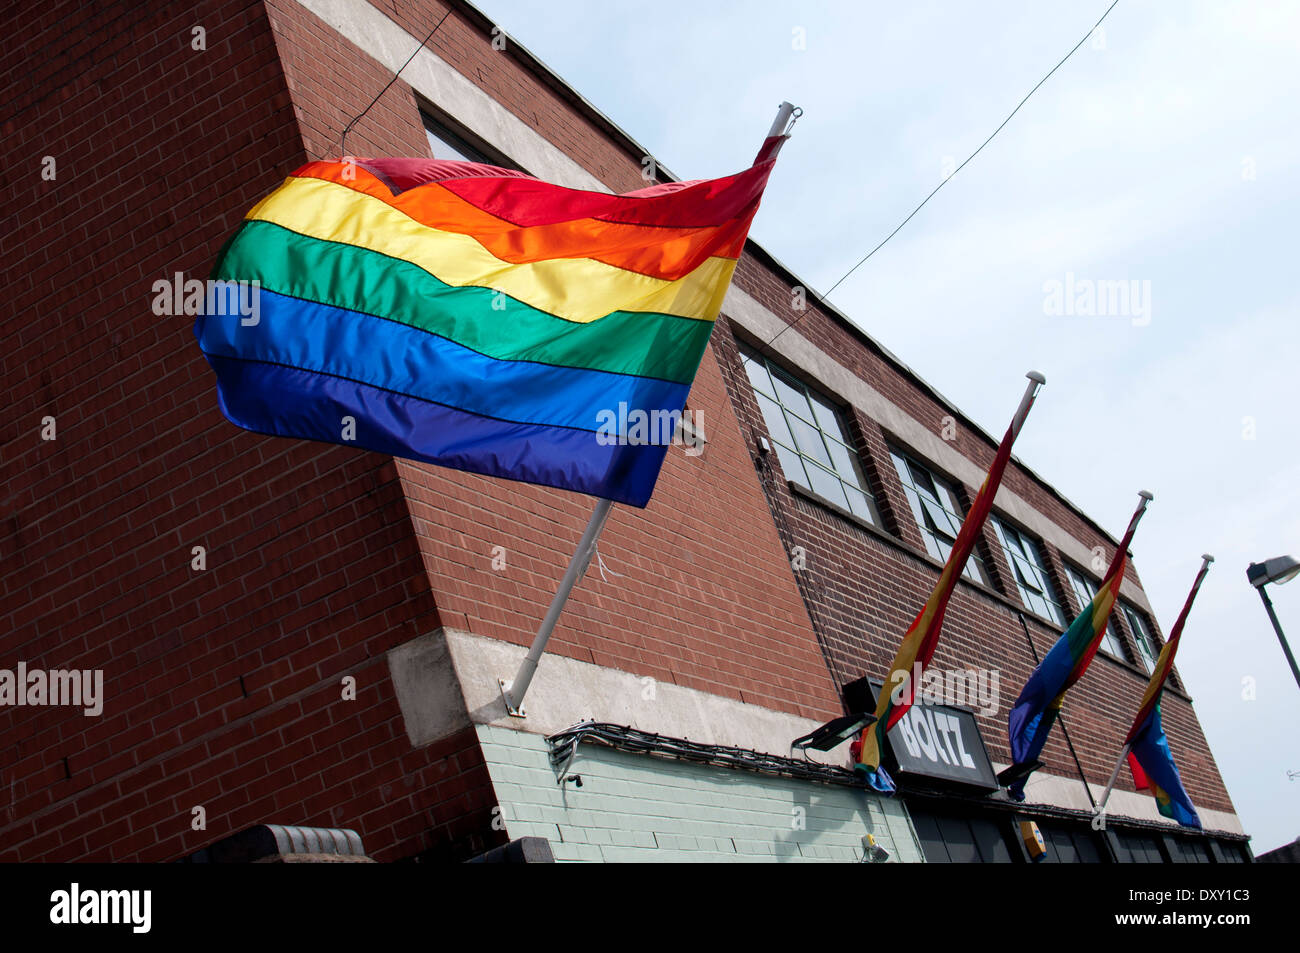 Gay Village, Birmingham, UK. Boltz club. Stock Photo